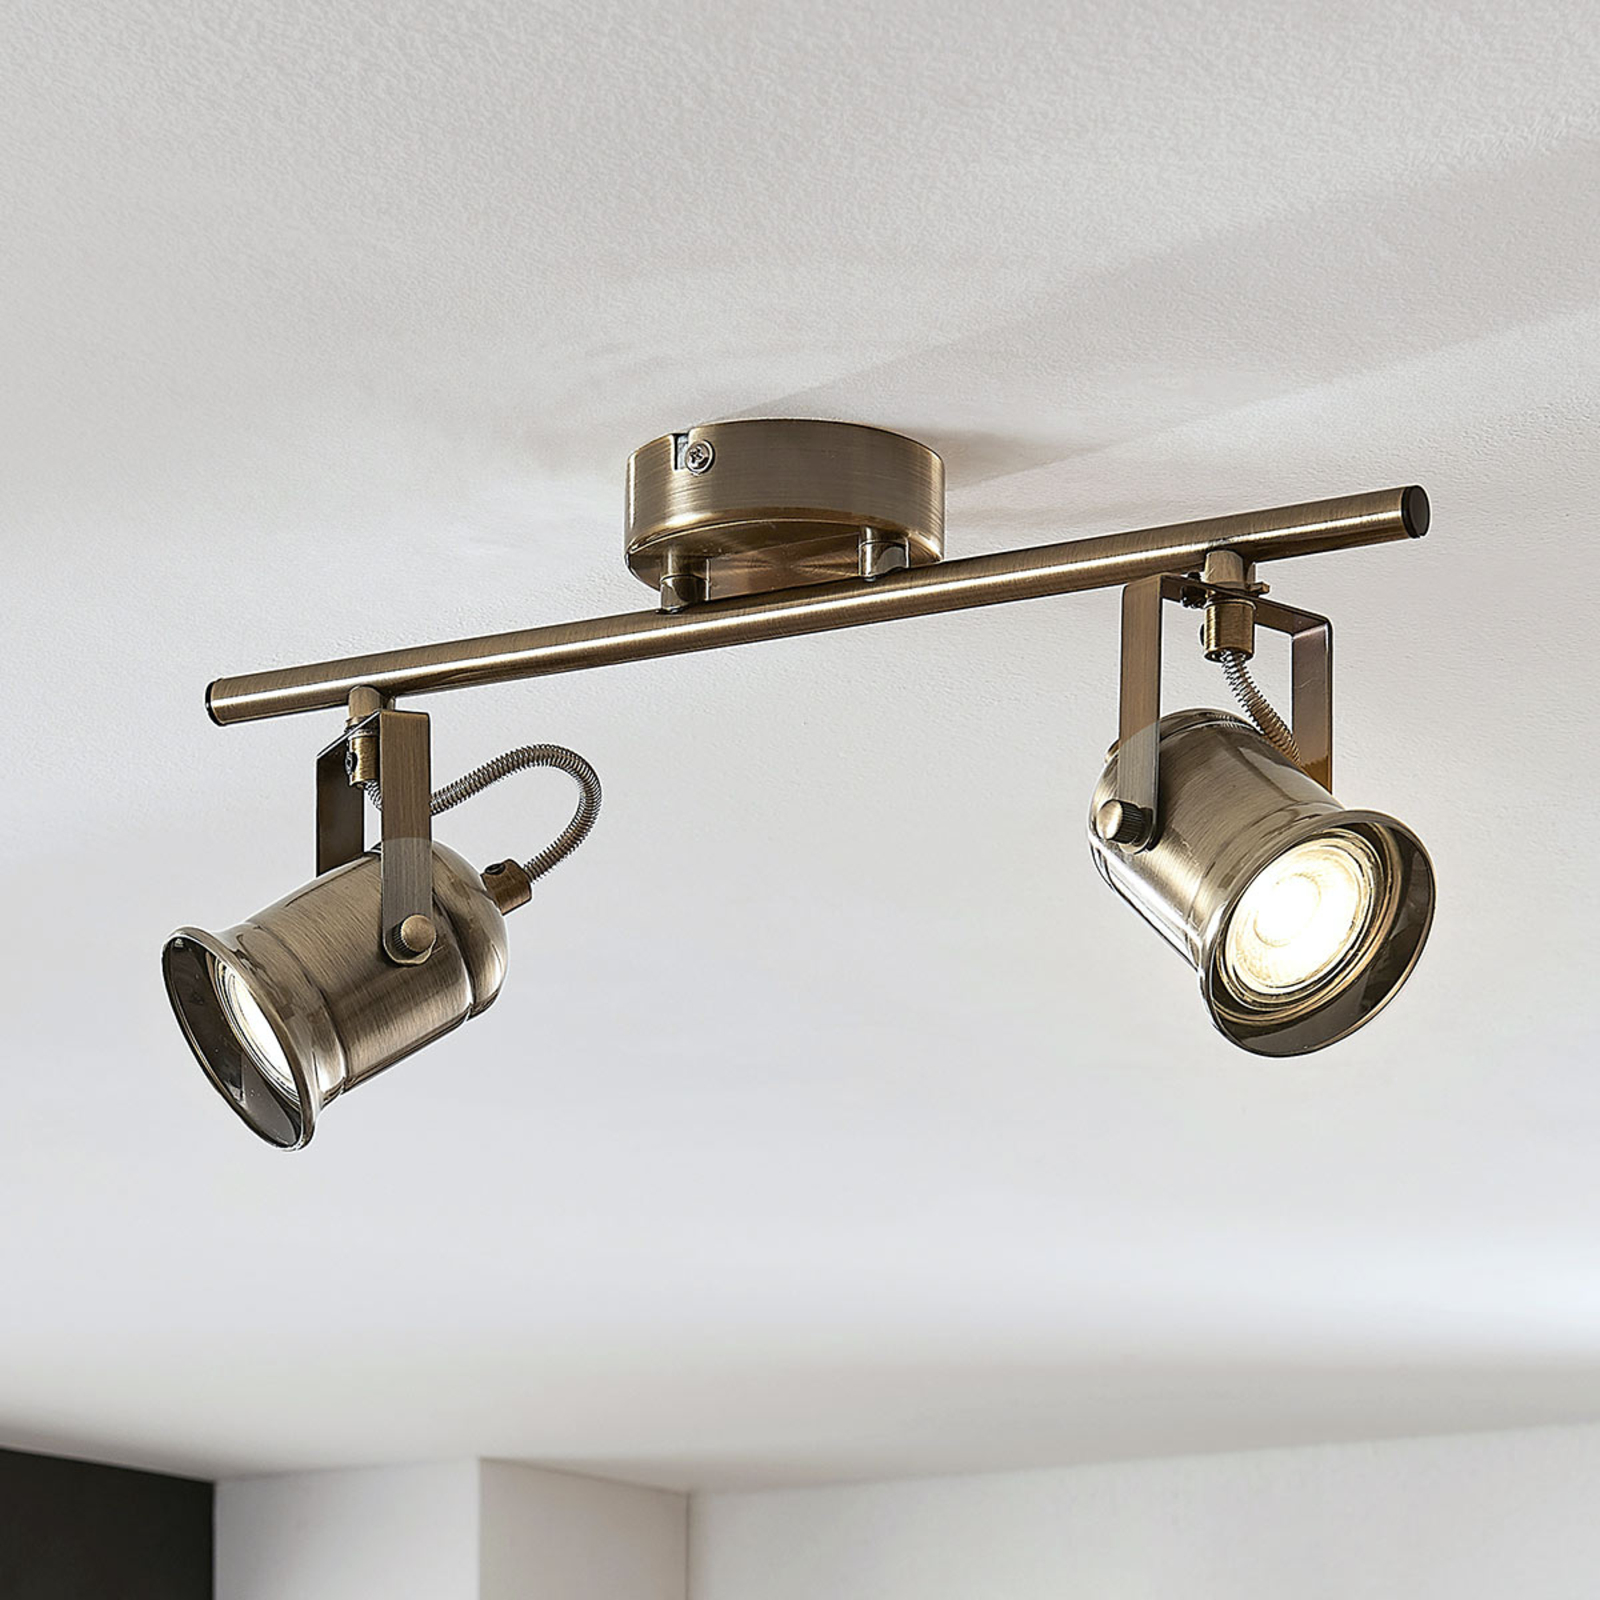 Anze ceiling spotlight in antique brass